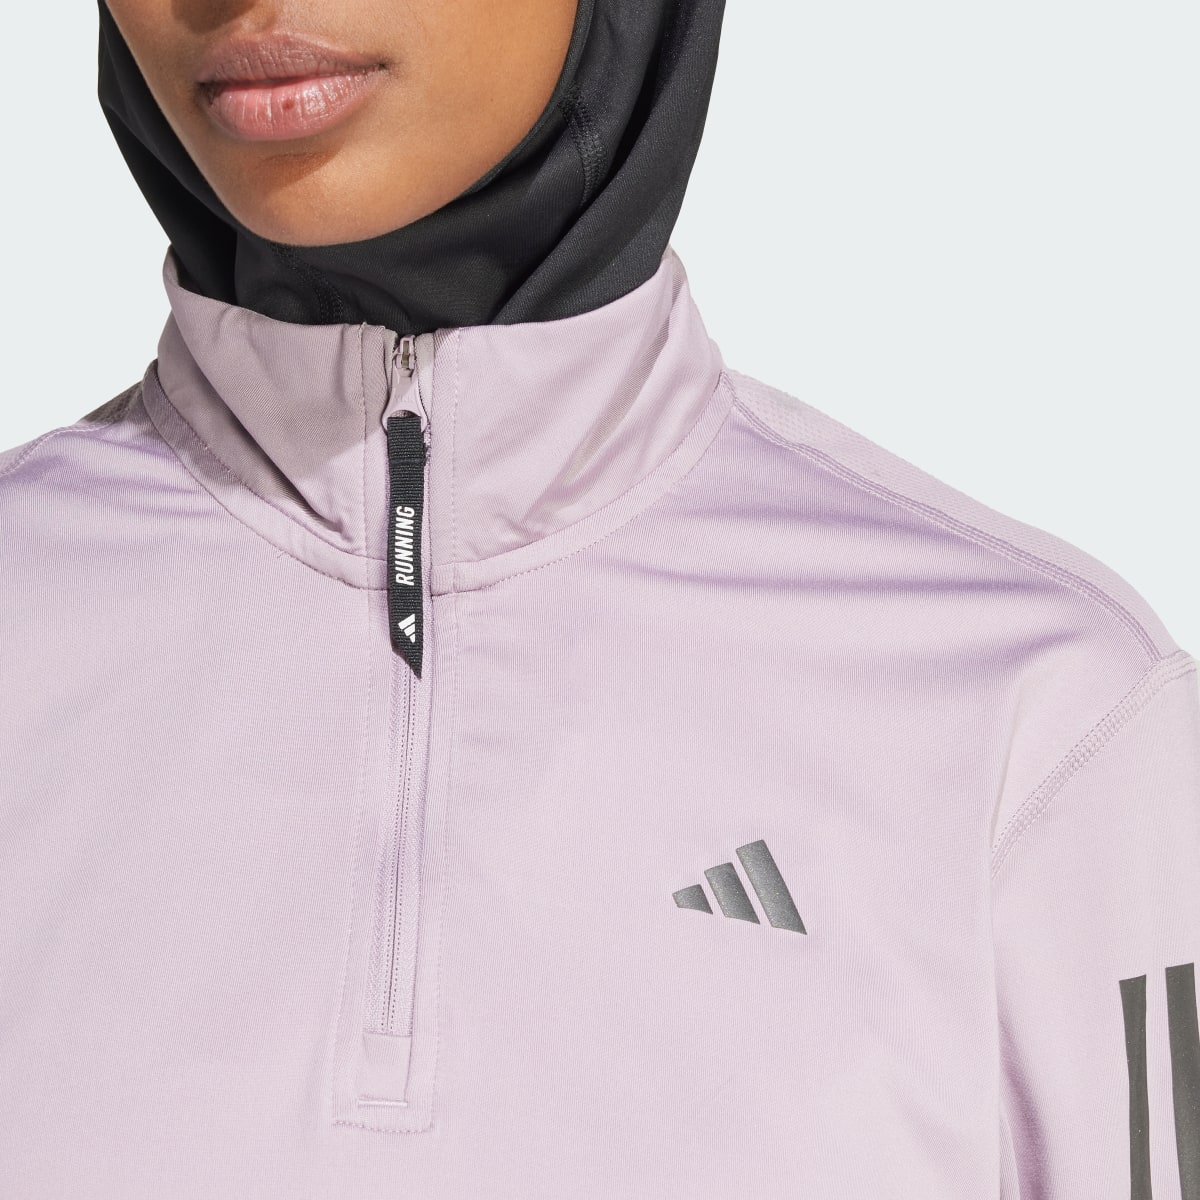 Adidas Own the Run Half-Zip Jacket. 7